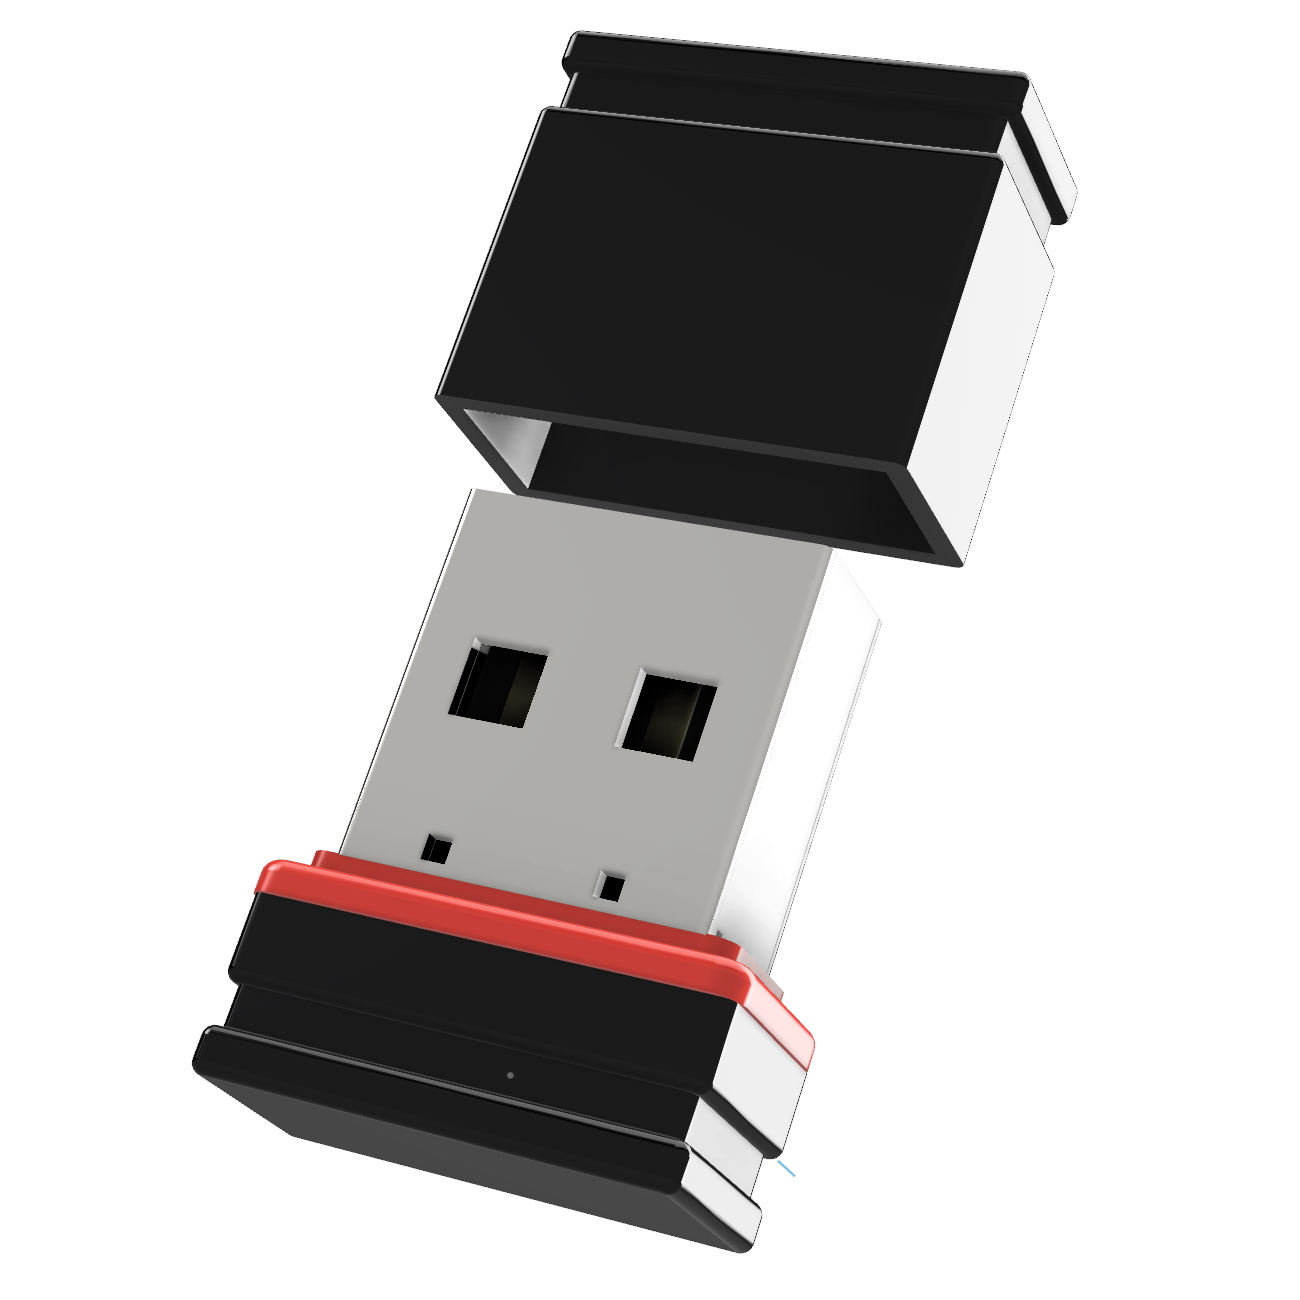 GB) USB-Stick GERMANY USB P1 ®ULTRA Mini (Schwarz/Rot, 1